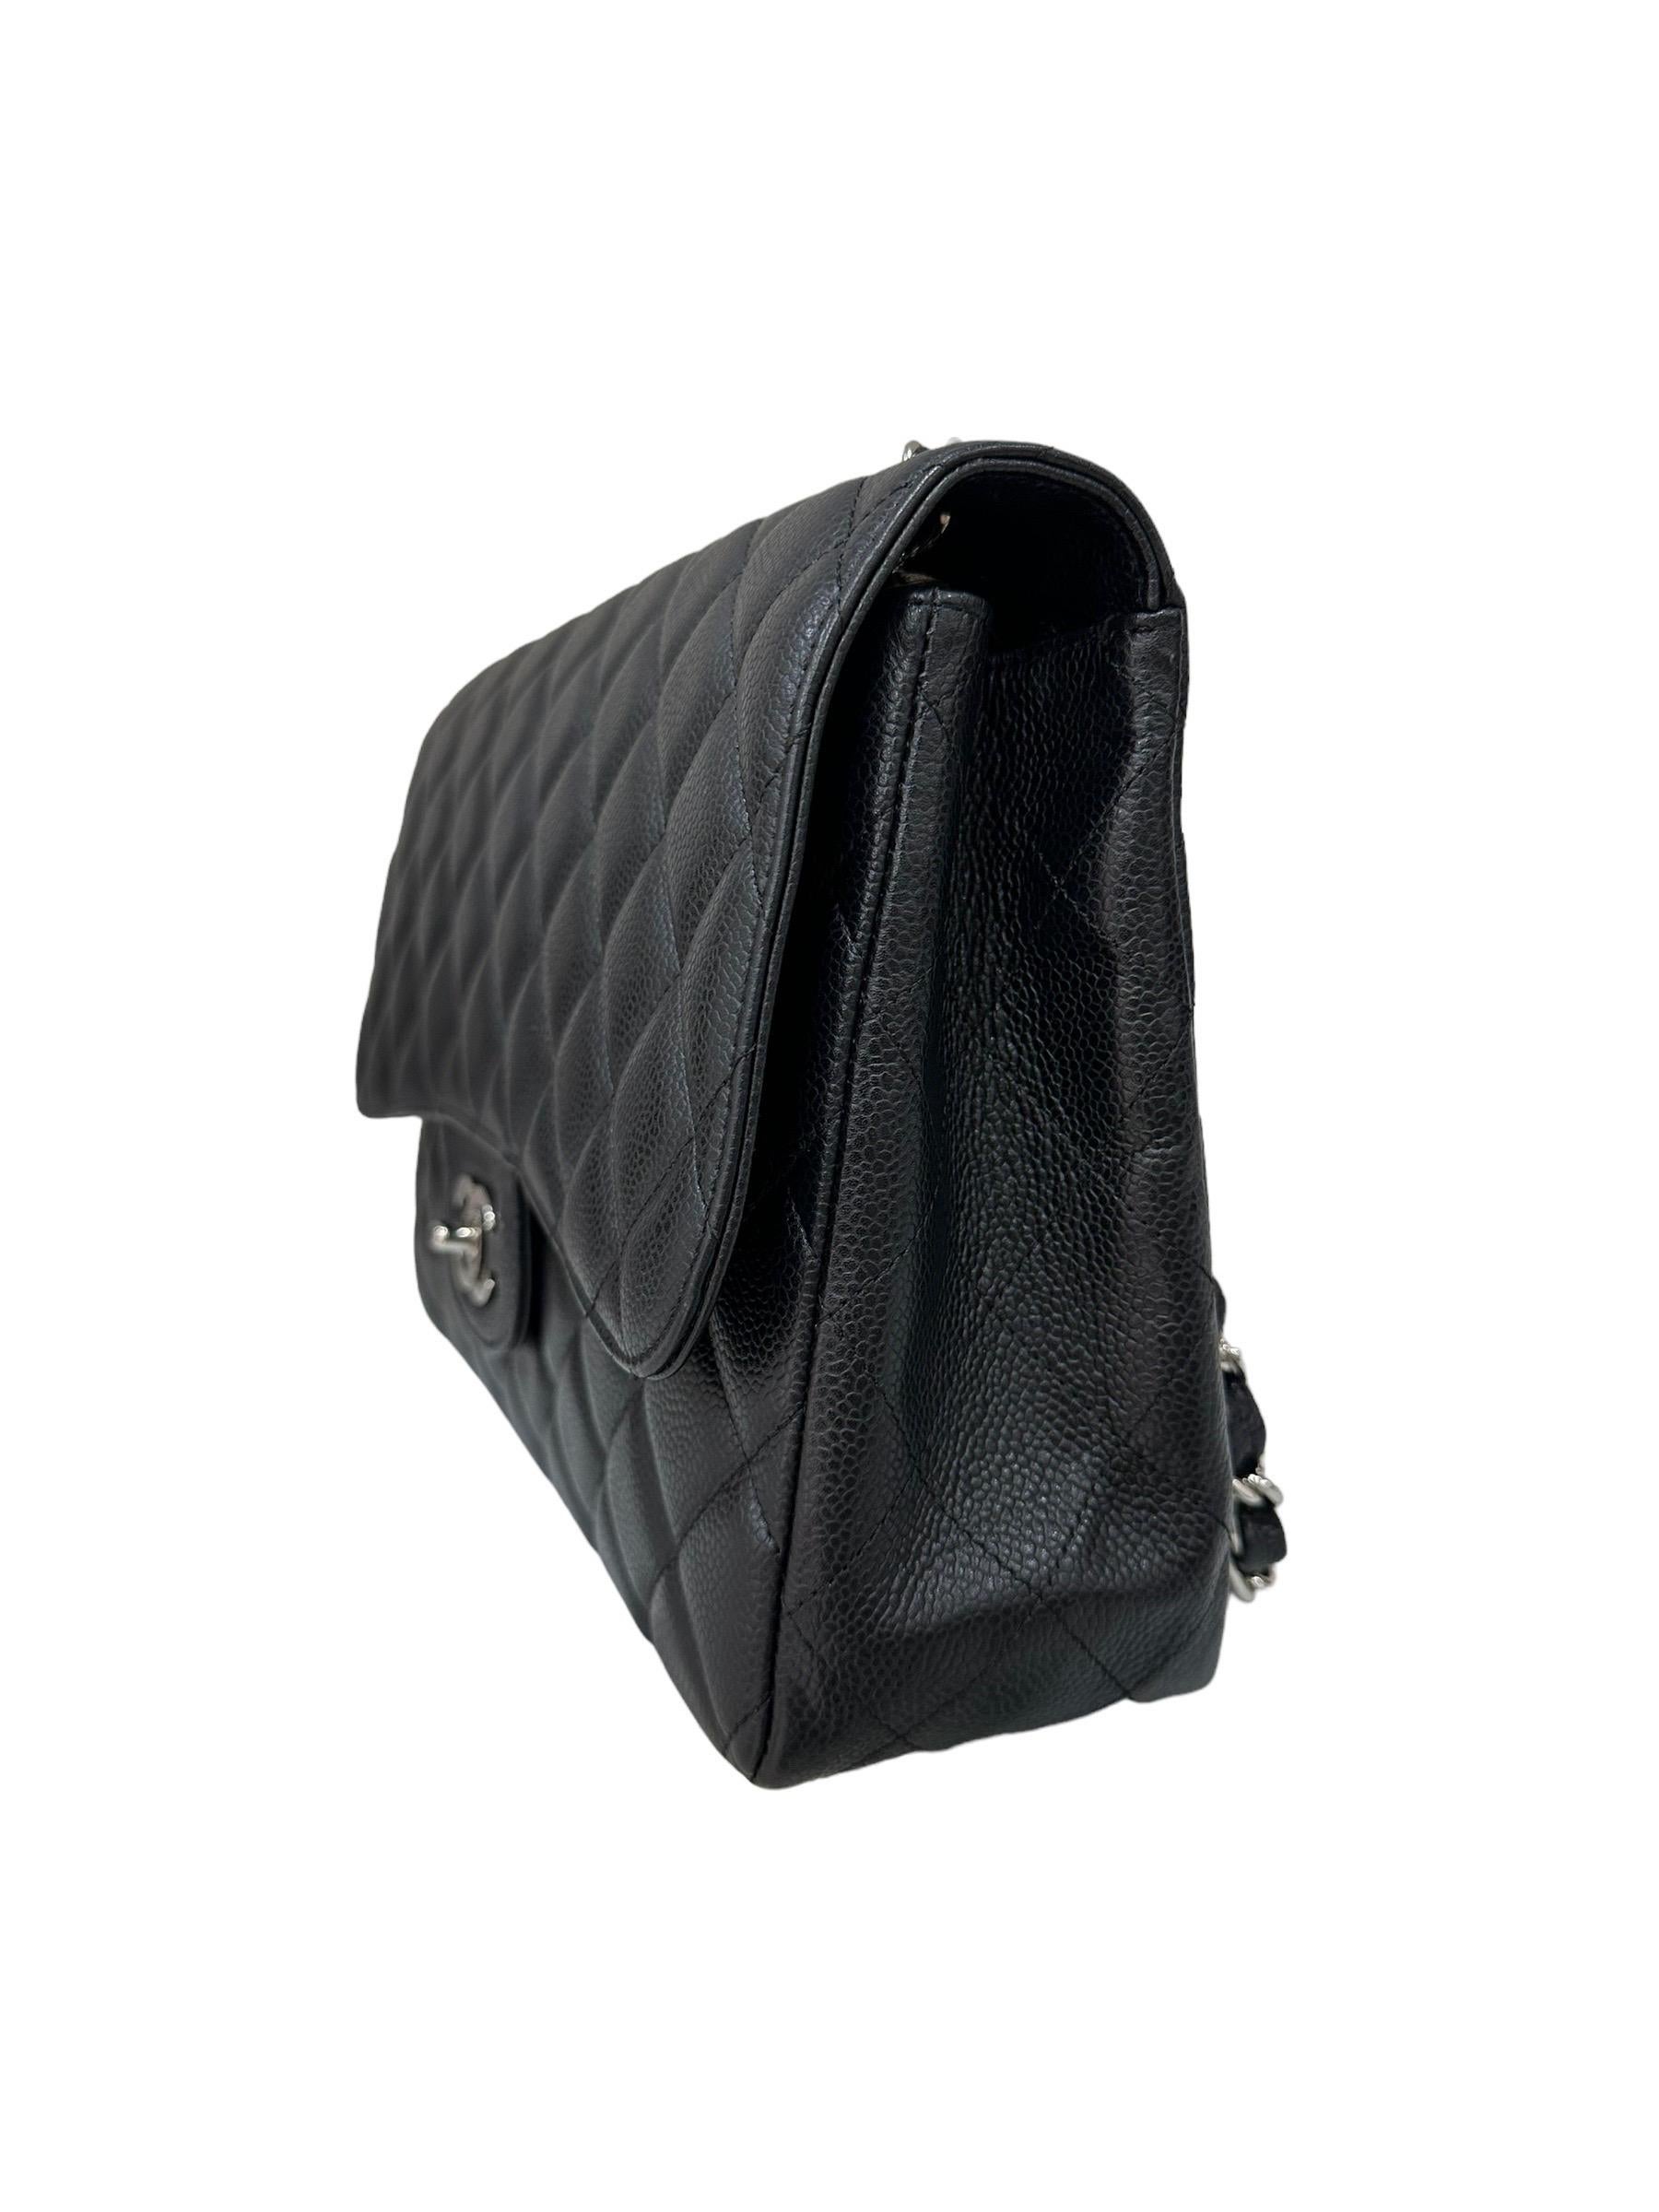 2009 Chanel Jumbo Black Caviar Leather Top Shoulder Bag  For Sale 1